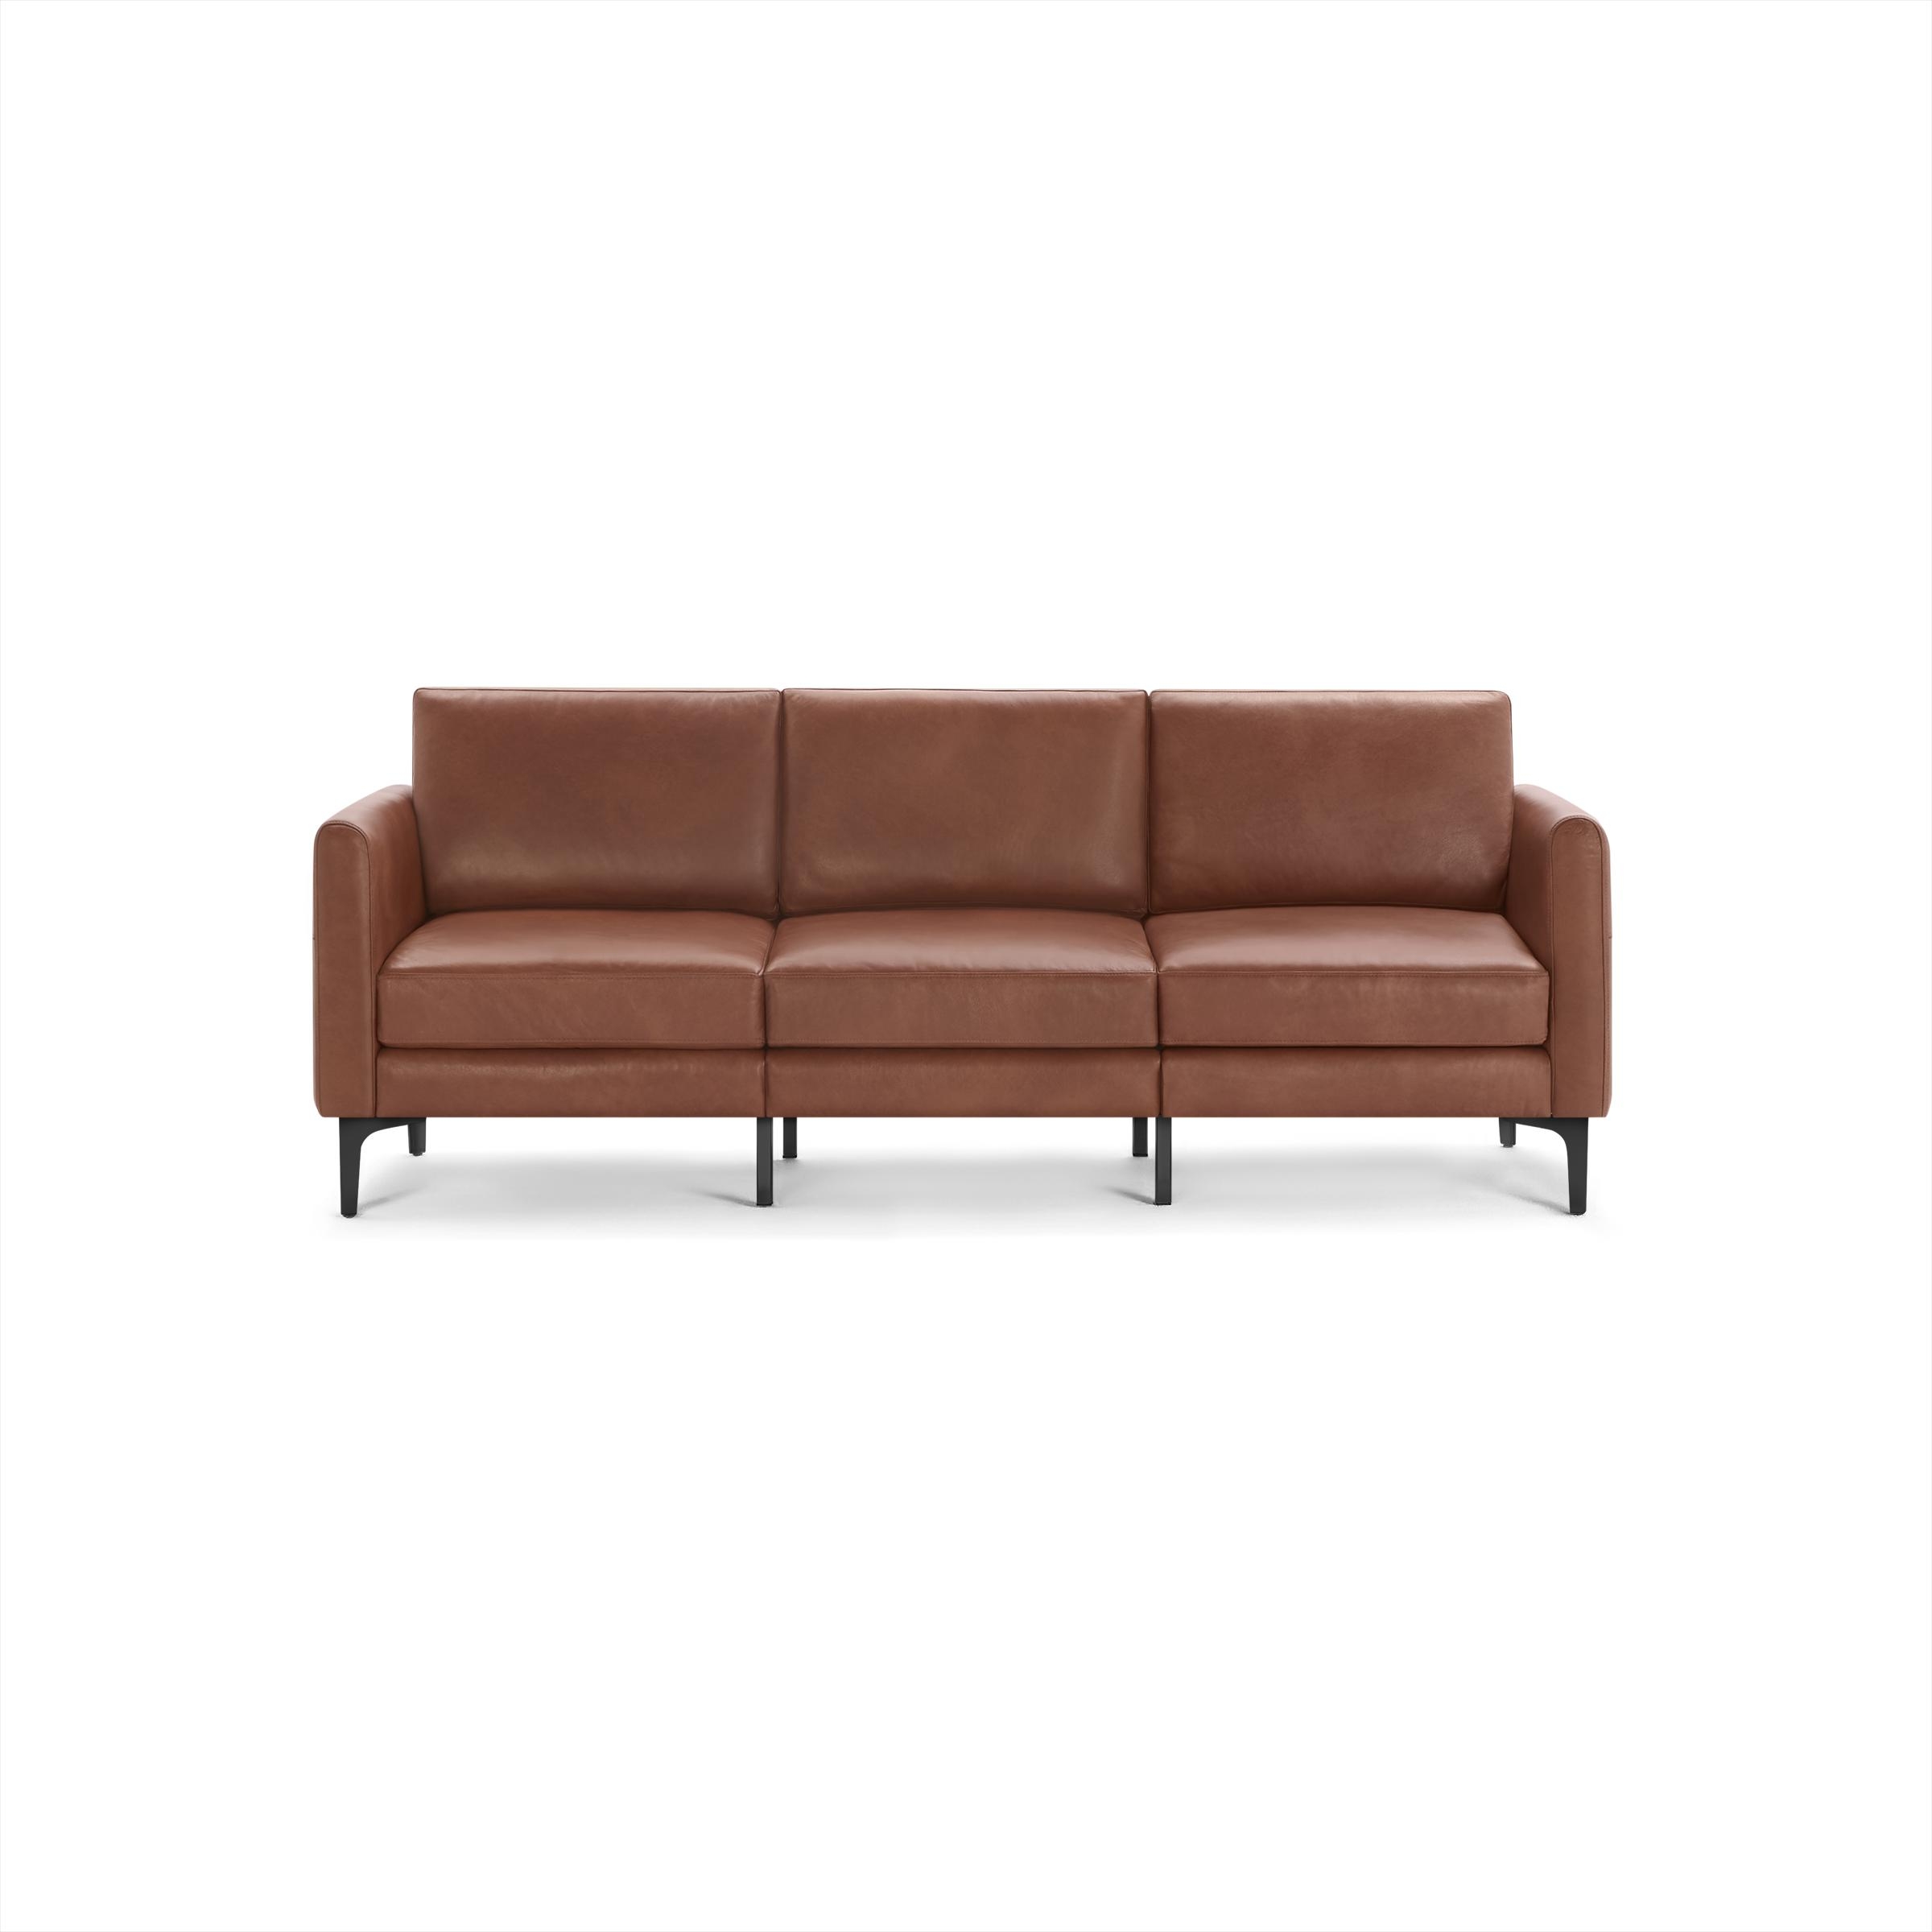 Nomad Leather Sofa in Chestnut, Black Metal Legs - Image 0